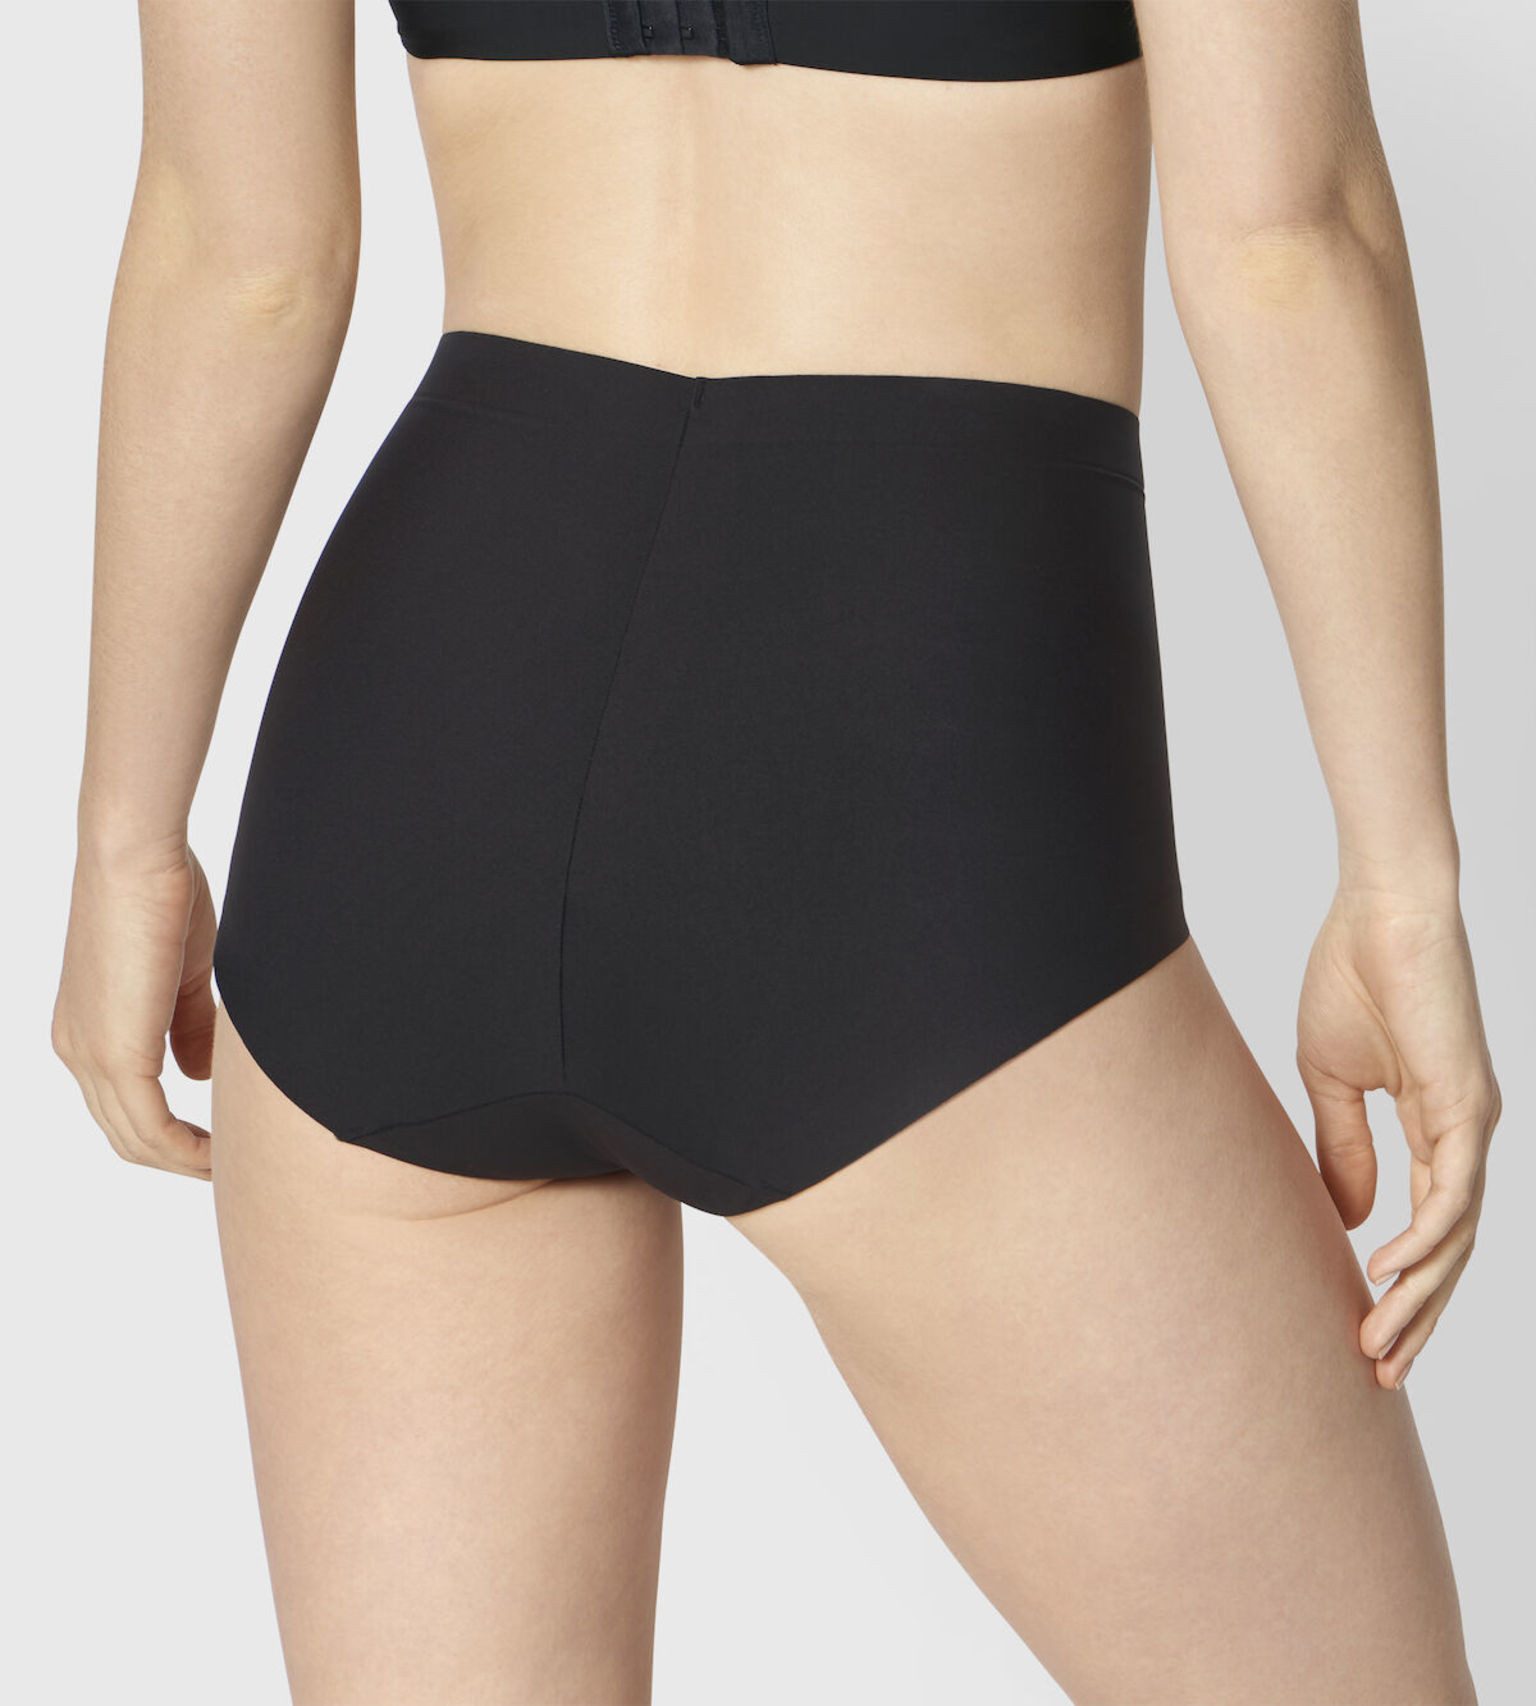 Kalhotky Medium Shaping Series Highwaist Panty černé - TRIUMPH BLACK L